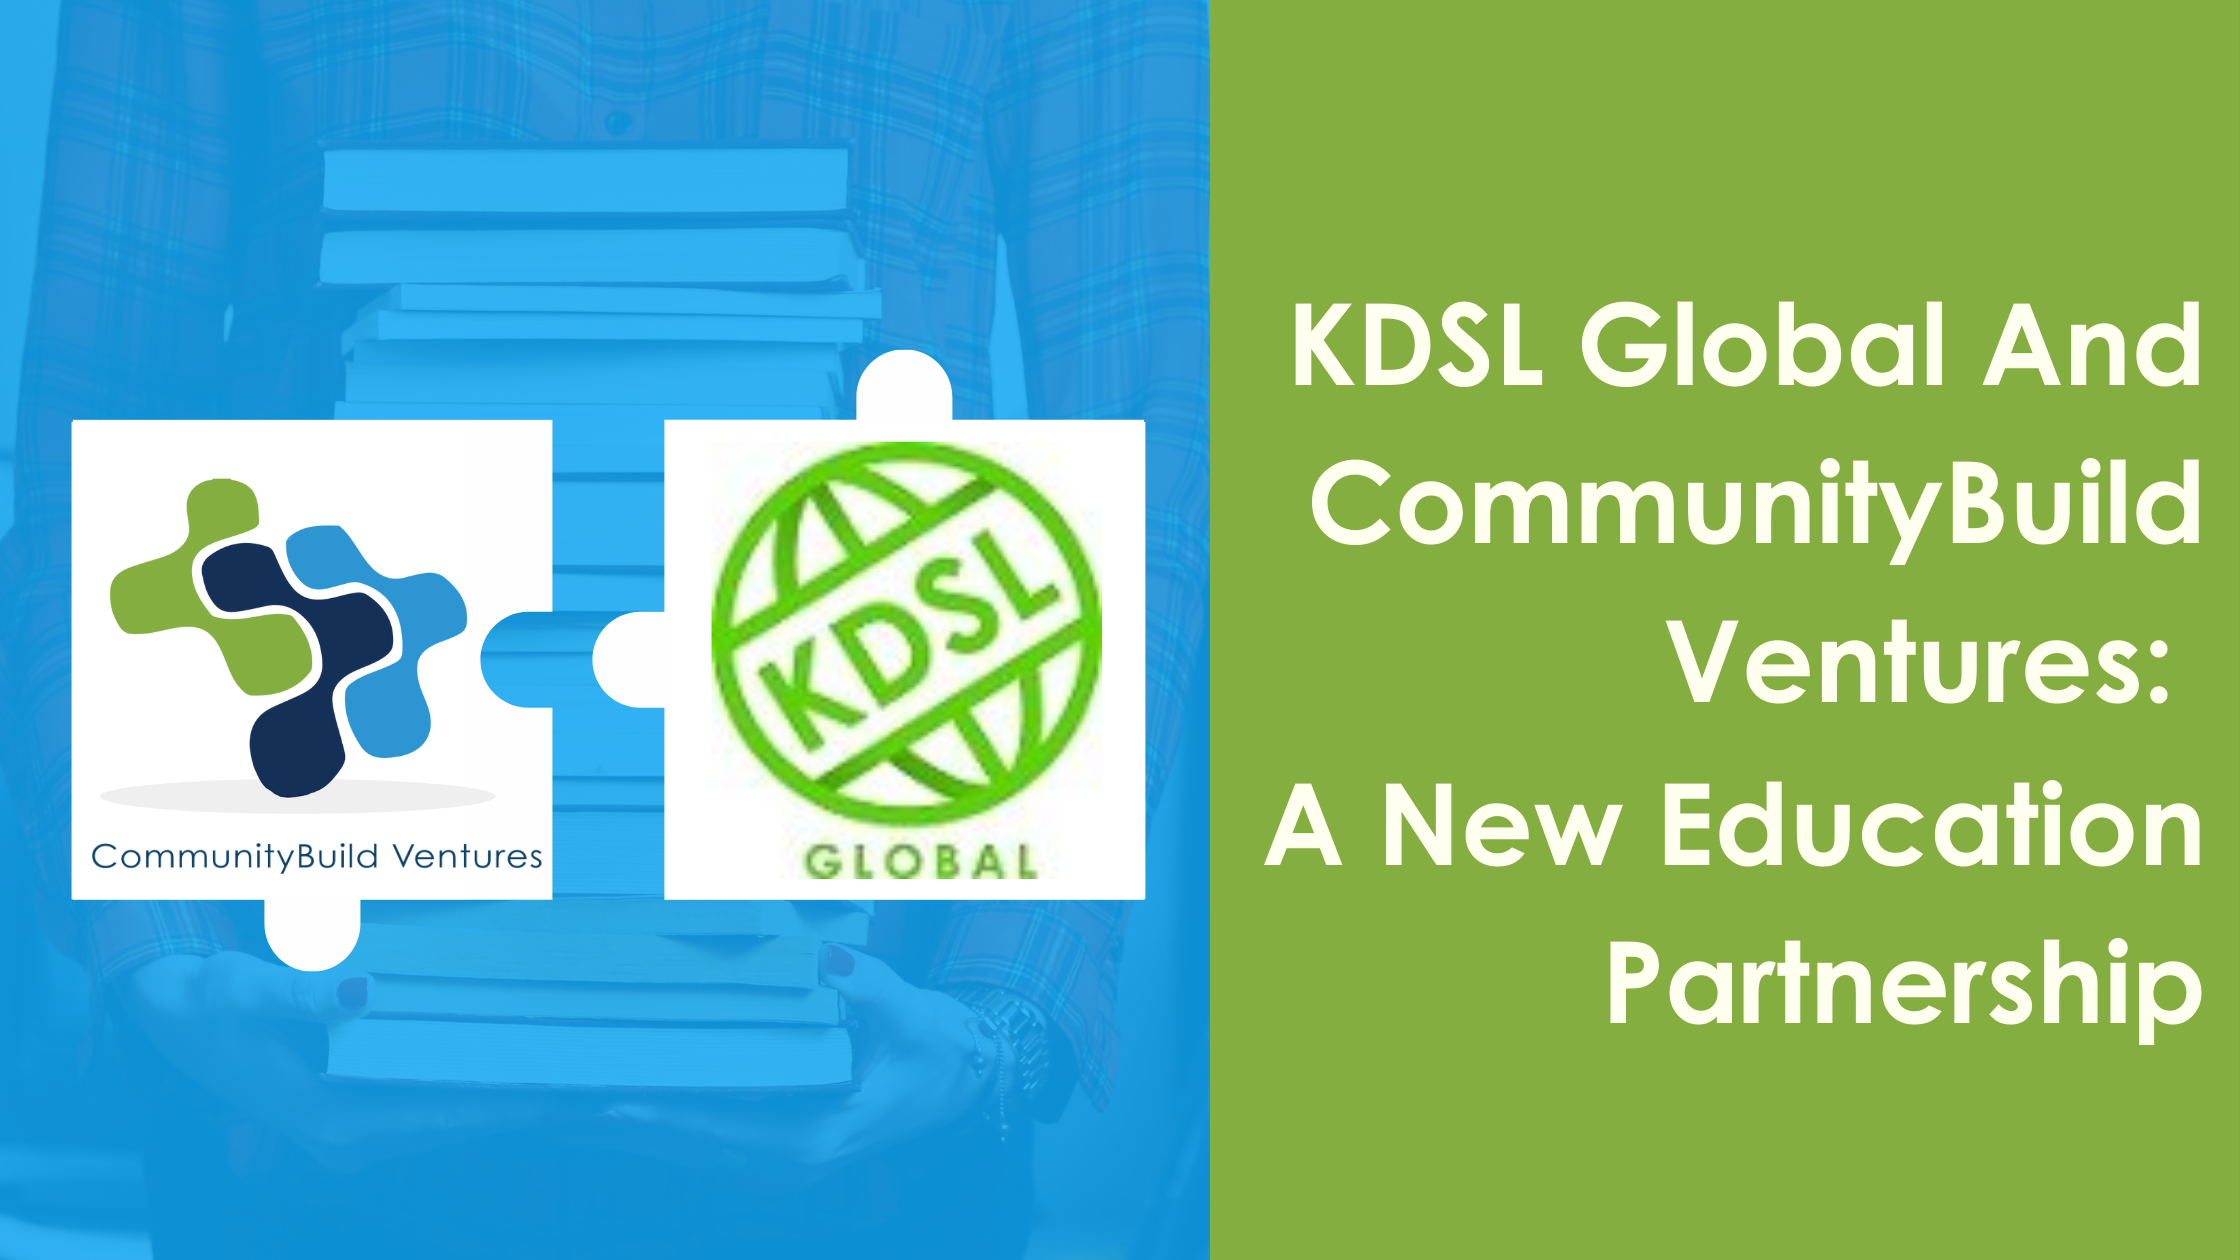 KDSL Global And CommunityBuild Ventures: A New Education Partnership